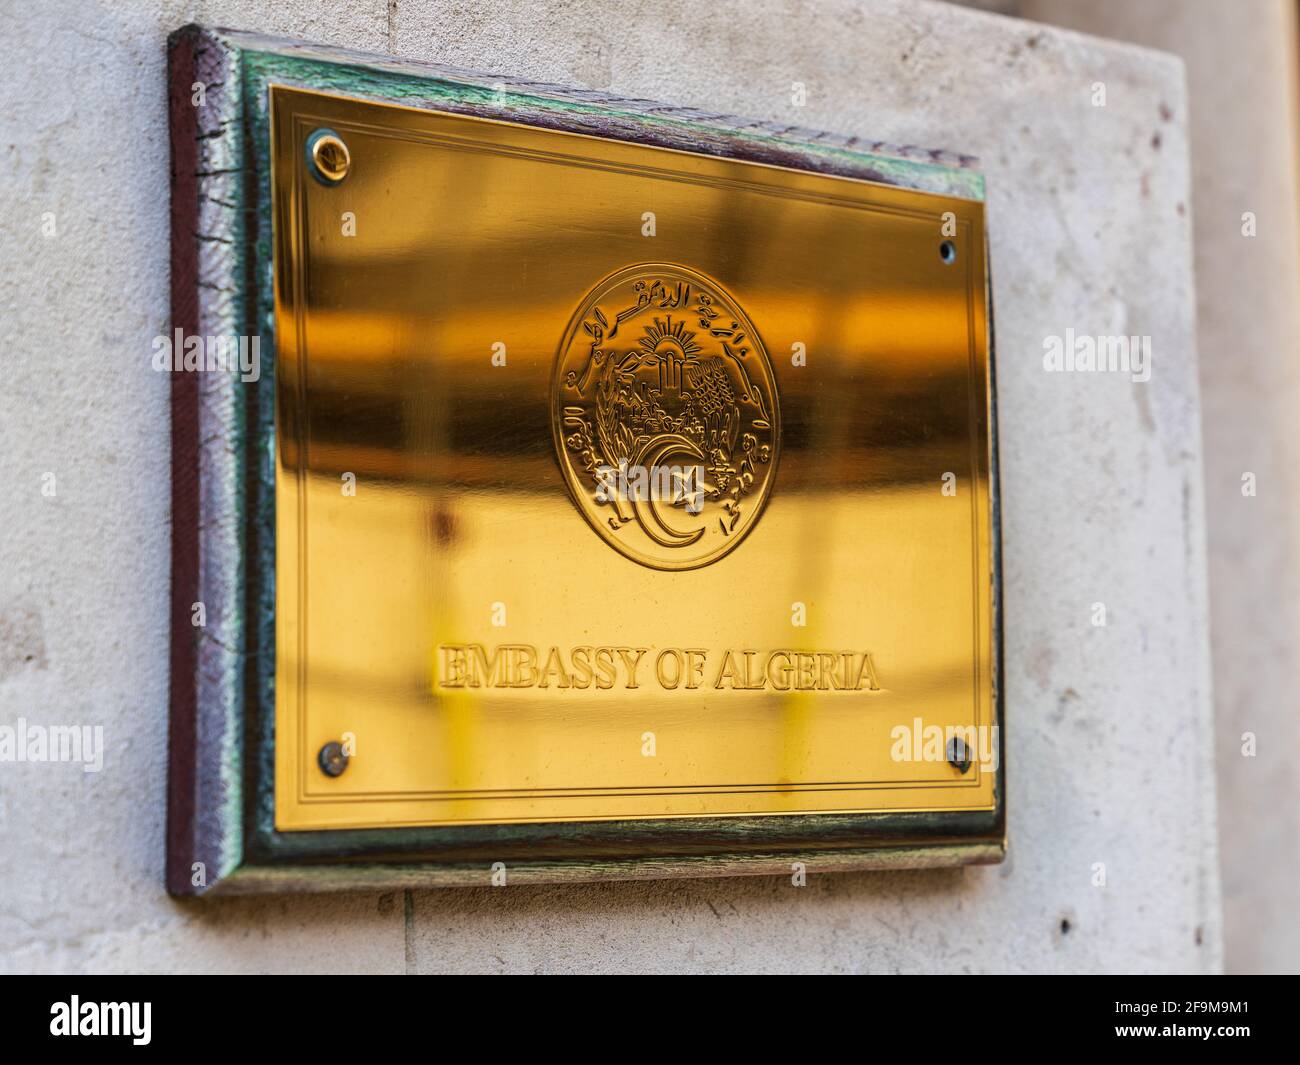 Embajada de Argelia Londres - Brass Sign on the Embassy of Algeria at Riding House St, Marylebone, Londres UK. Foto de stock